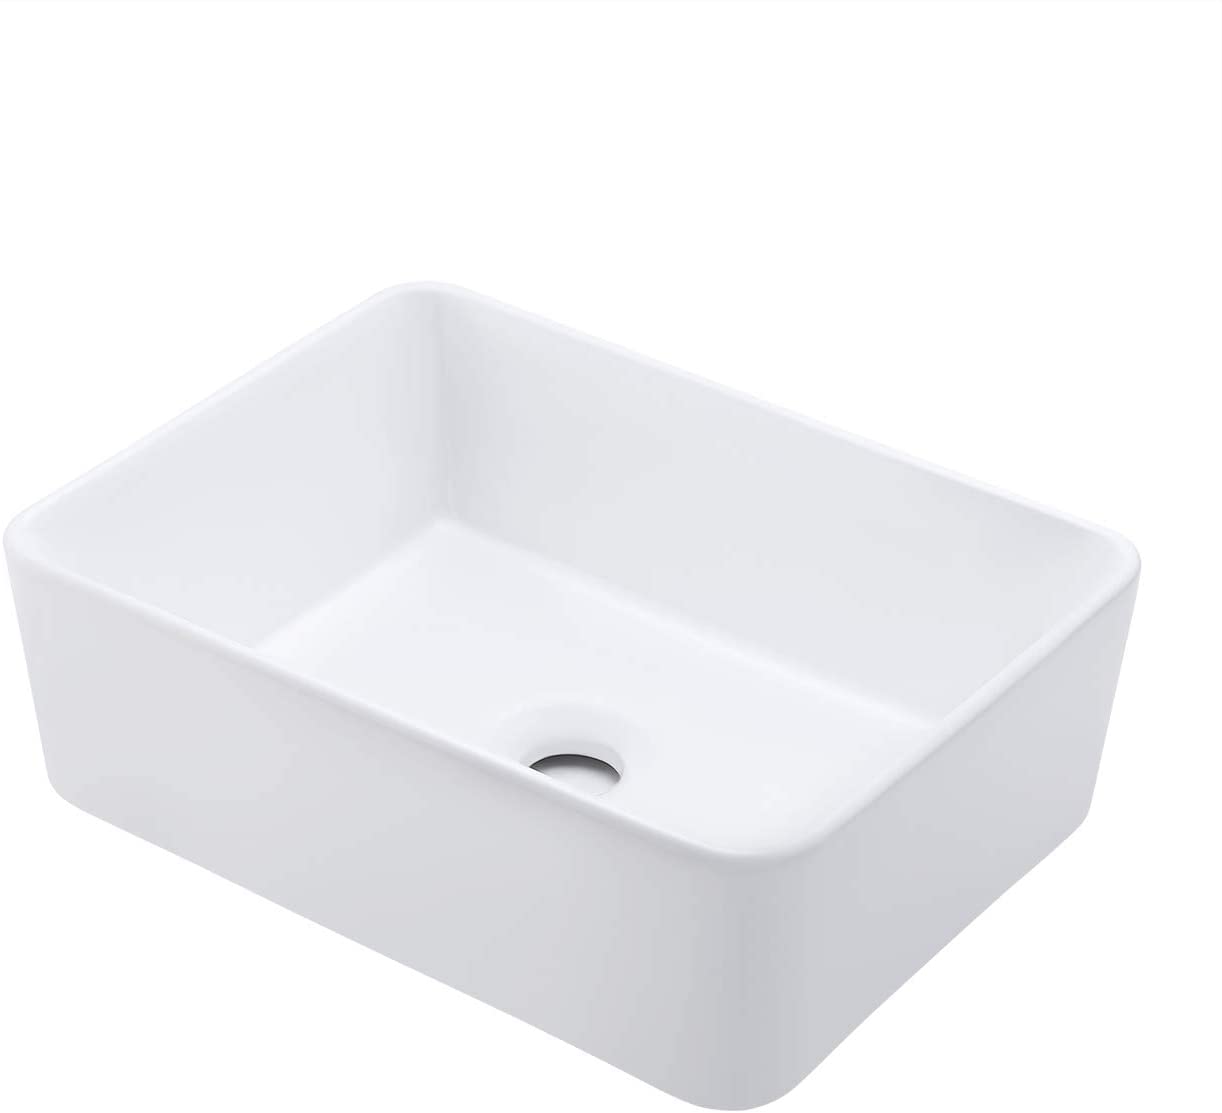 https://www.dontwasteyourmoney.com/wp-content/uploads/2022/05/kes-bvs110s40-above-counter-porcelain-rectangle-vessel-bathroom-sink-bathroom-sinks.jpg